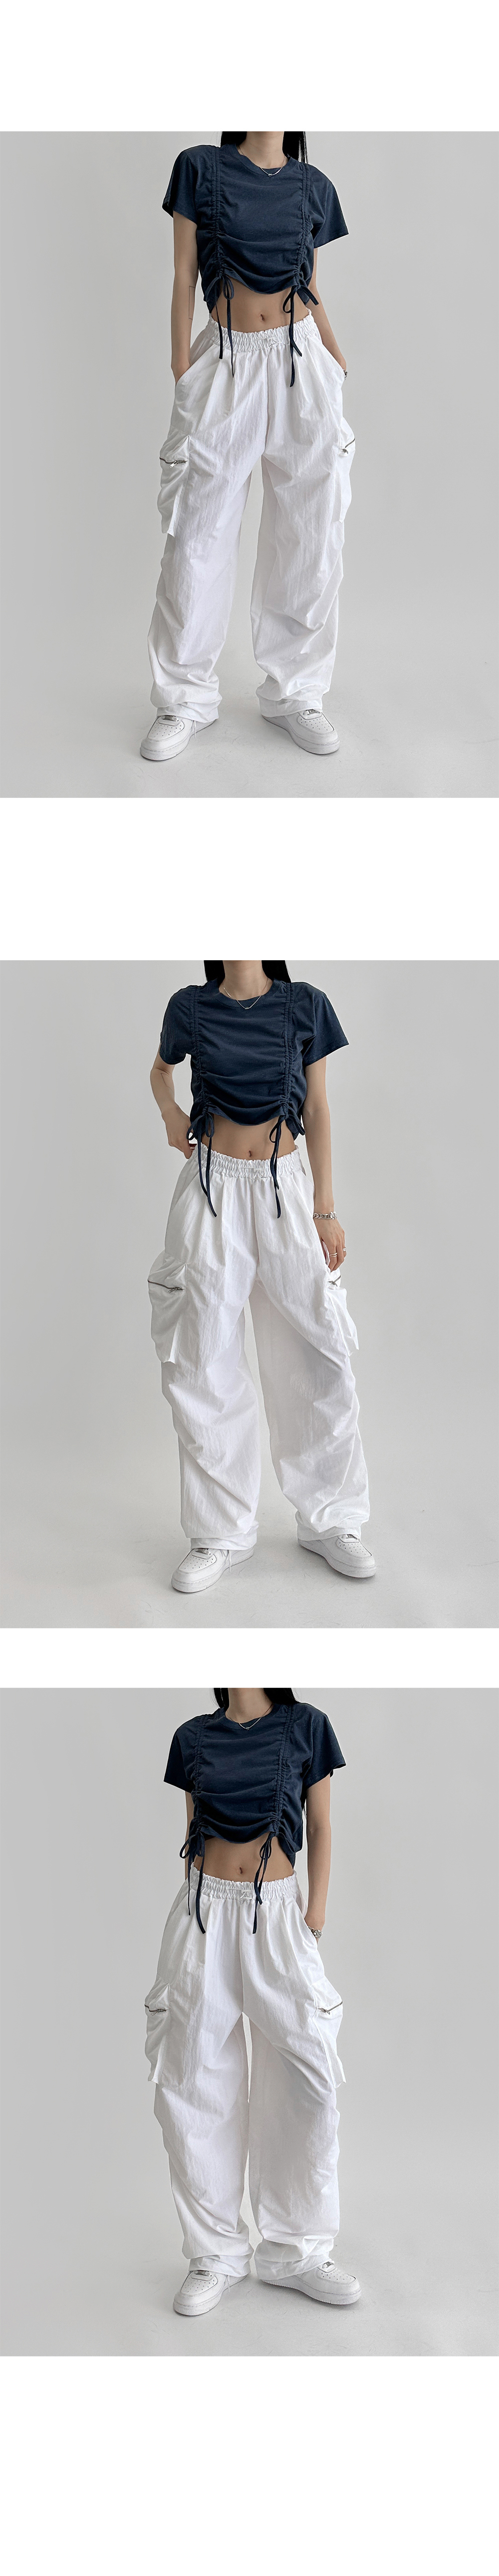 suspenders skirt/pants model image-S1L7